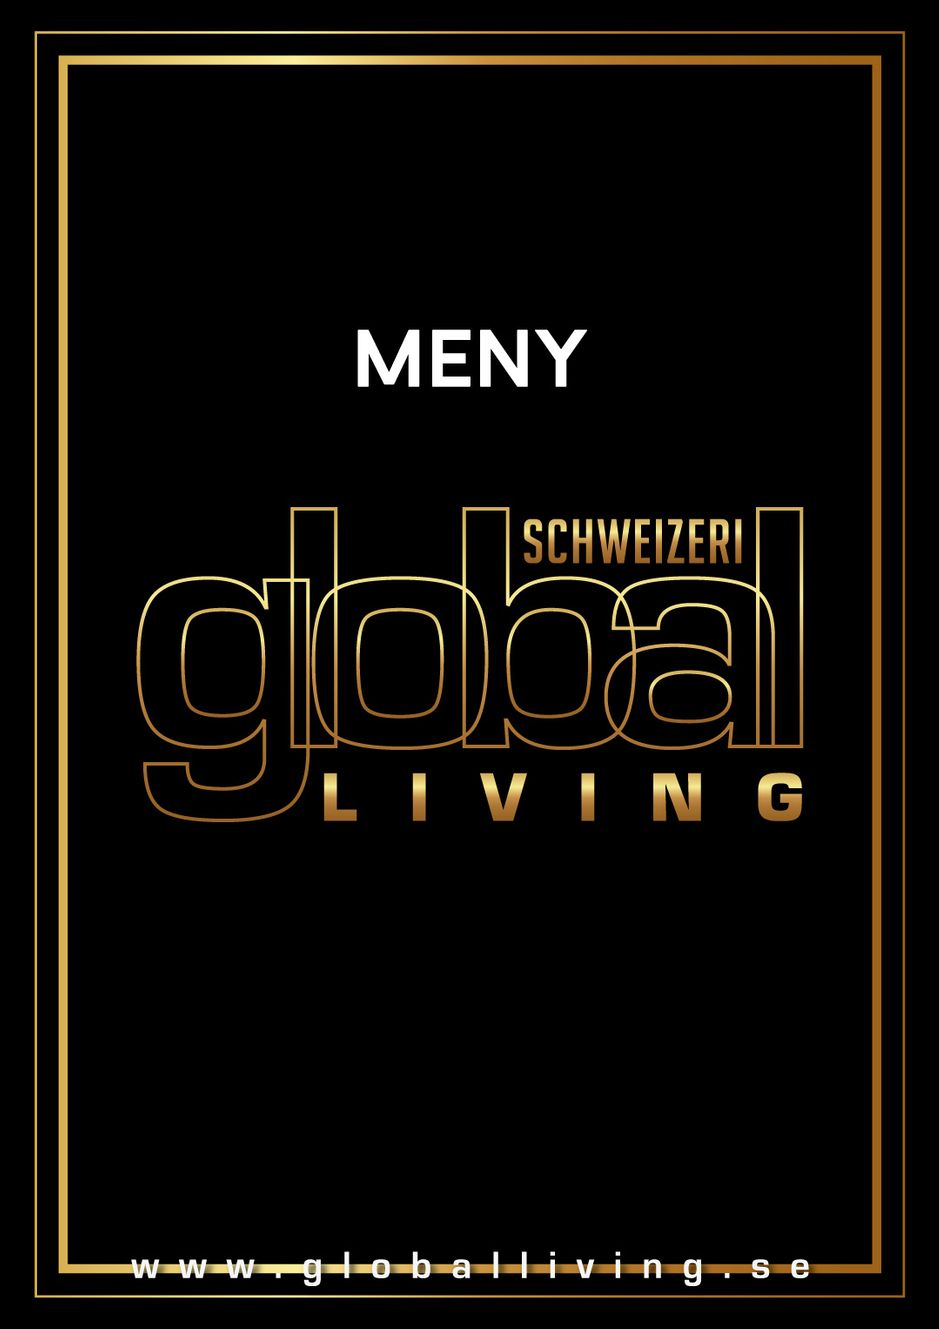 Global-Living-Meny-A4-200220-01